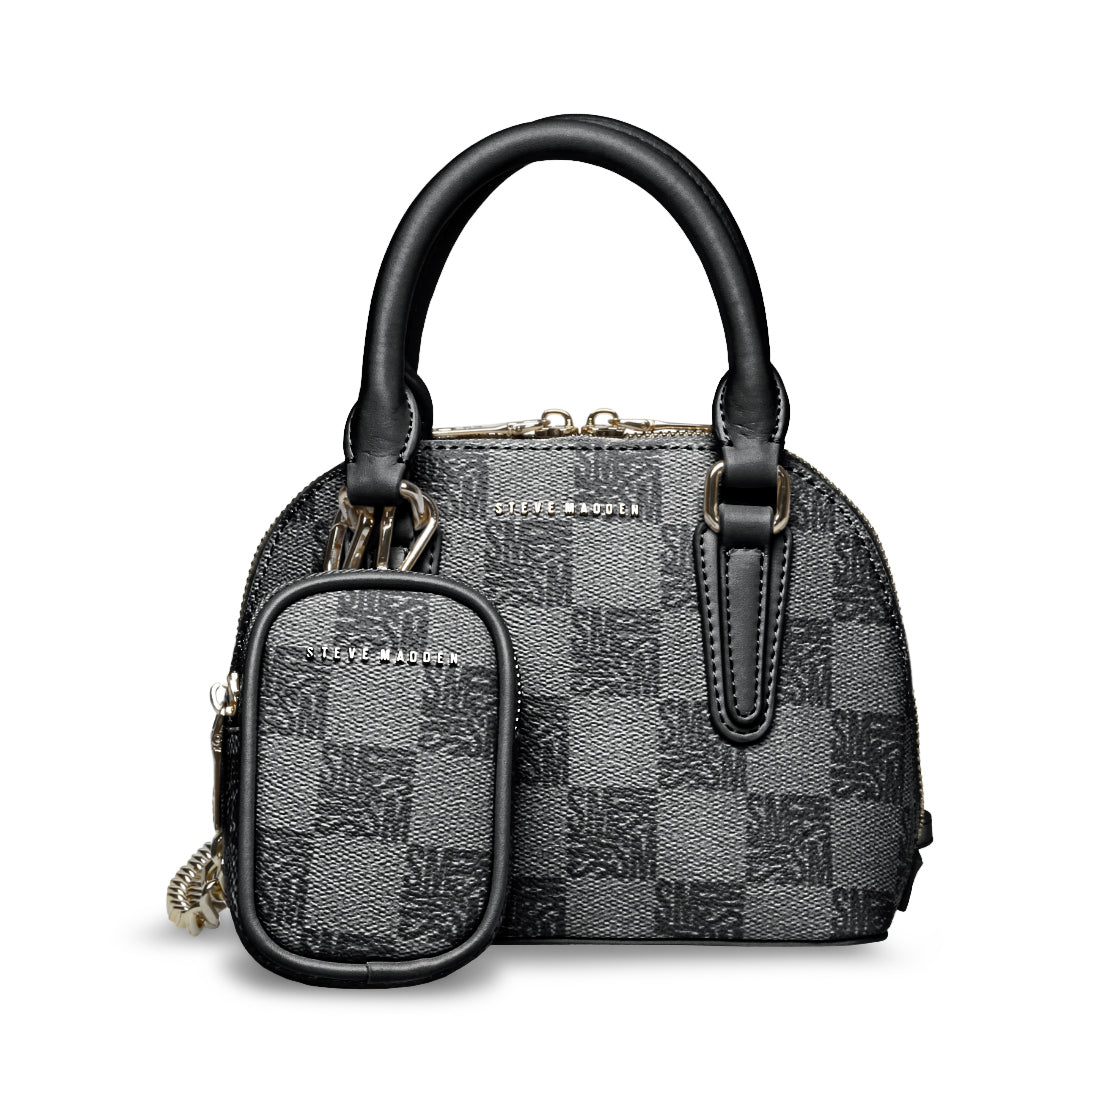 BJORDY Black Shoulder Bags | Women's Designer Handbags – Steve Madden Canada